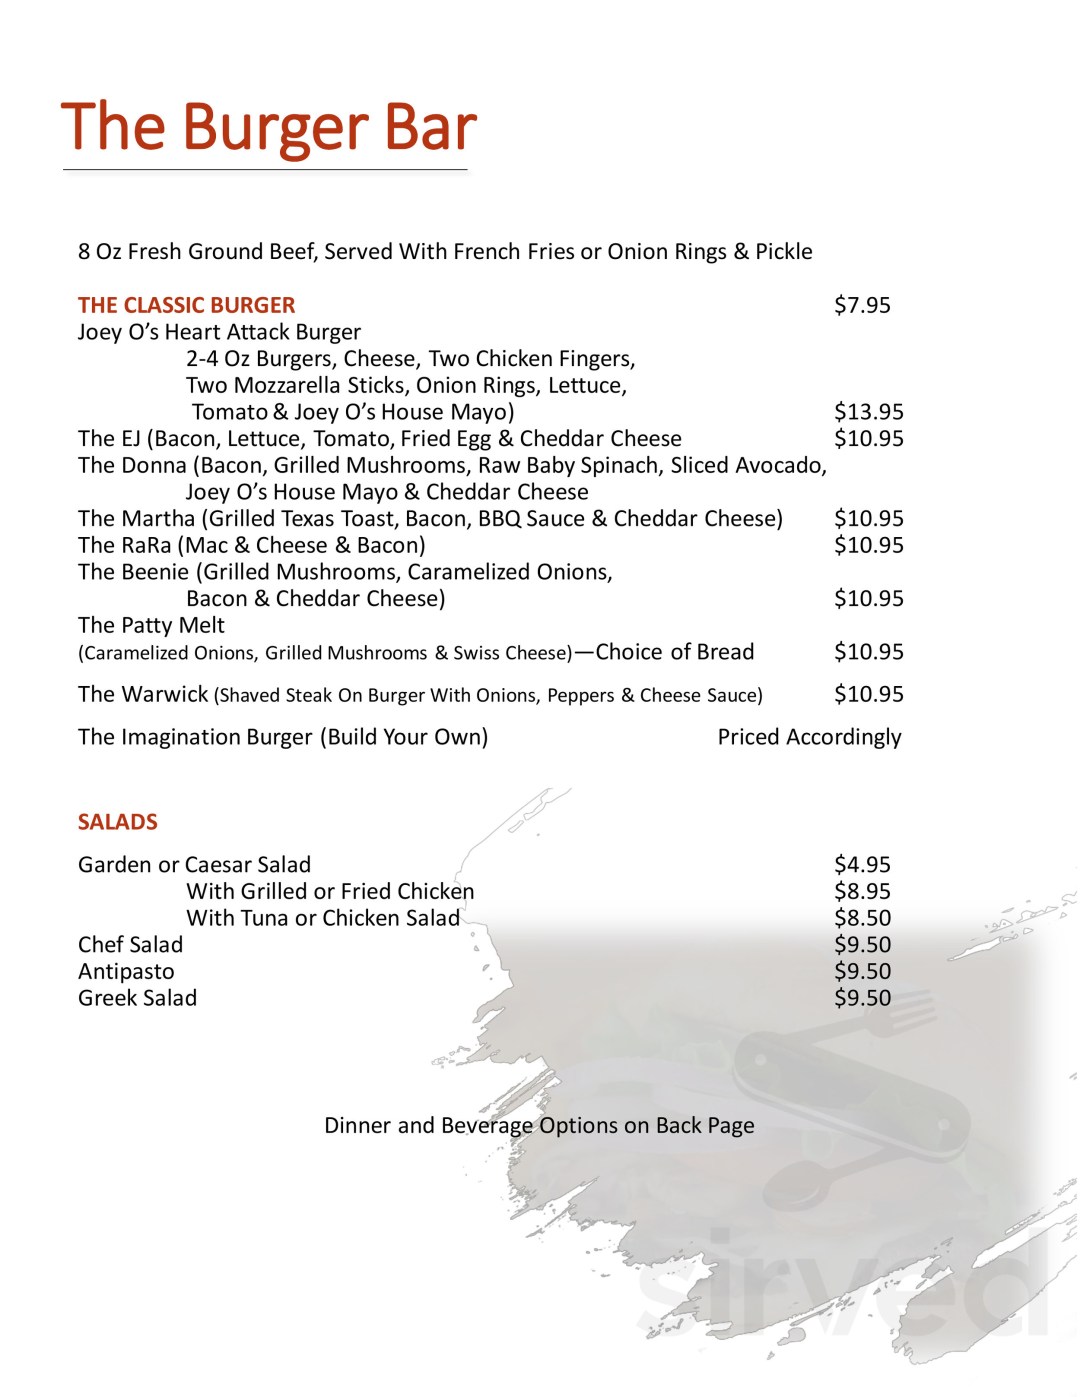 Picture of: Joey O’s Restaurant menu in Warwick, Rhode Island, USA